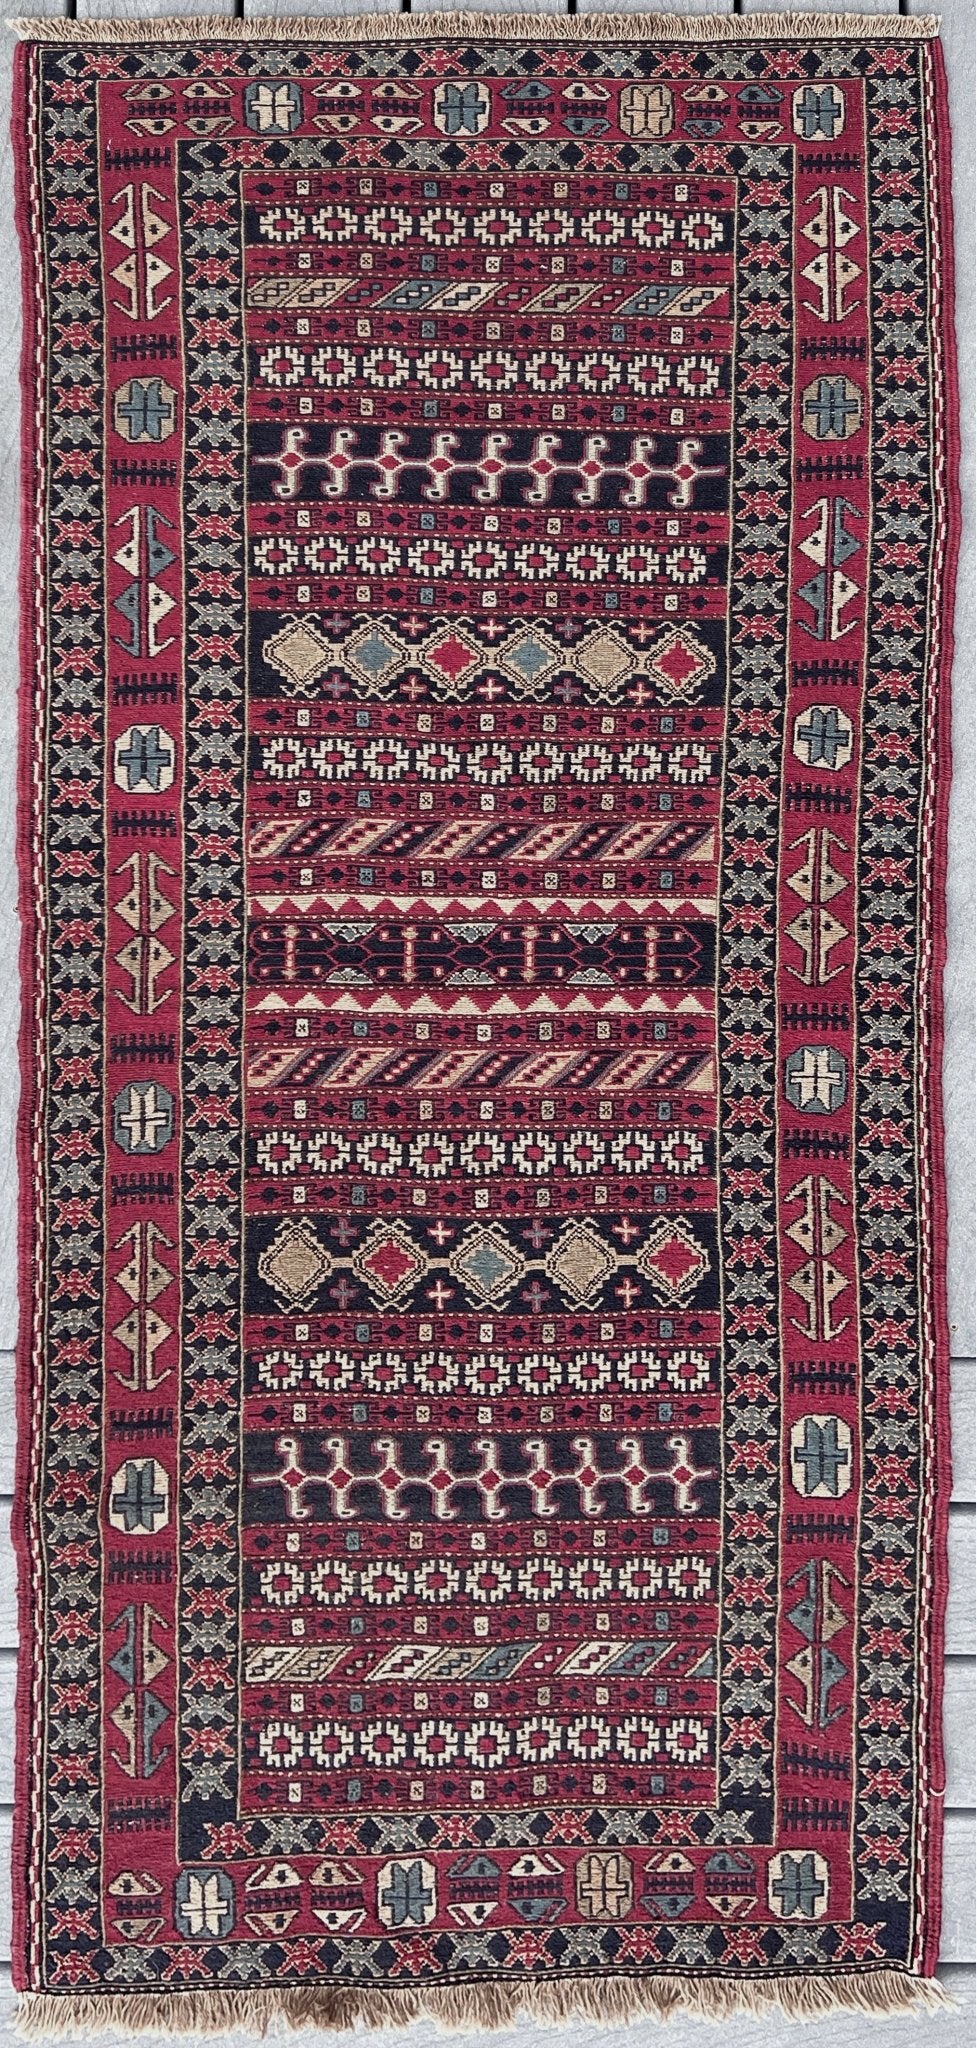 Rahrah persian soumak kilim rug. Oriental rug shop san francisco bay area.